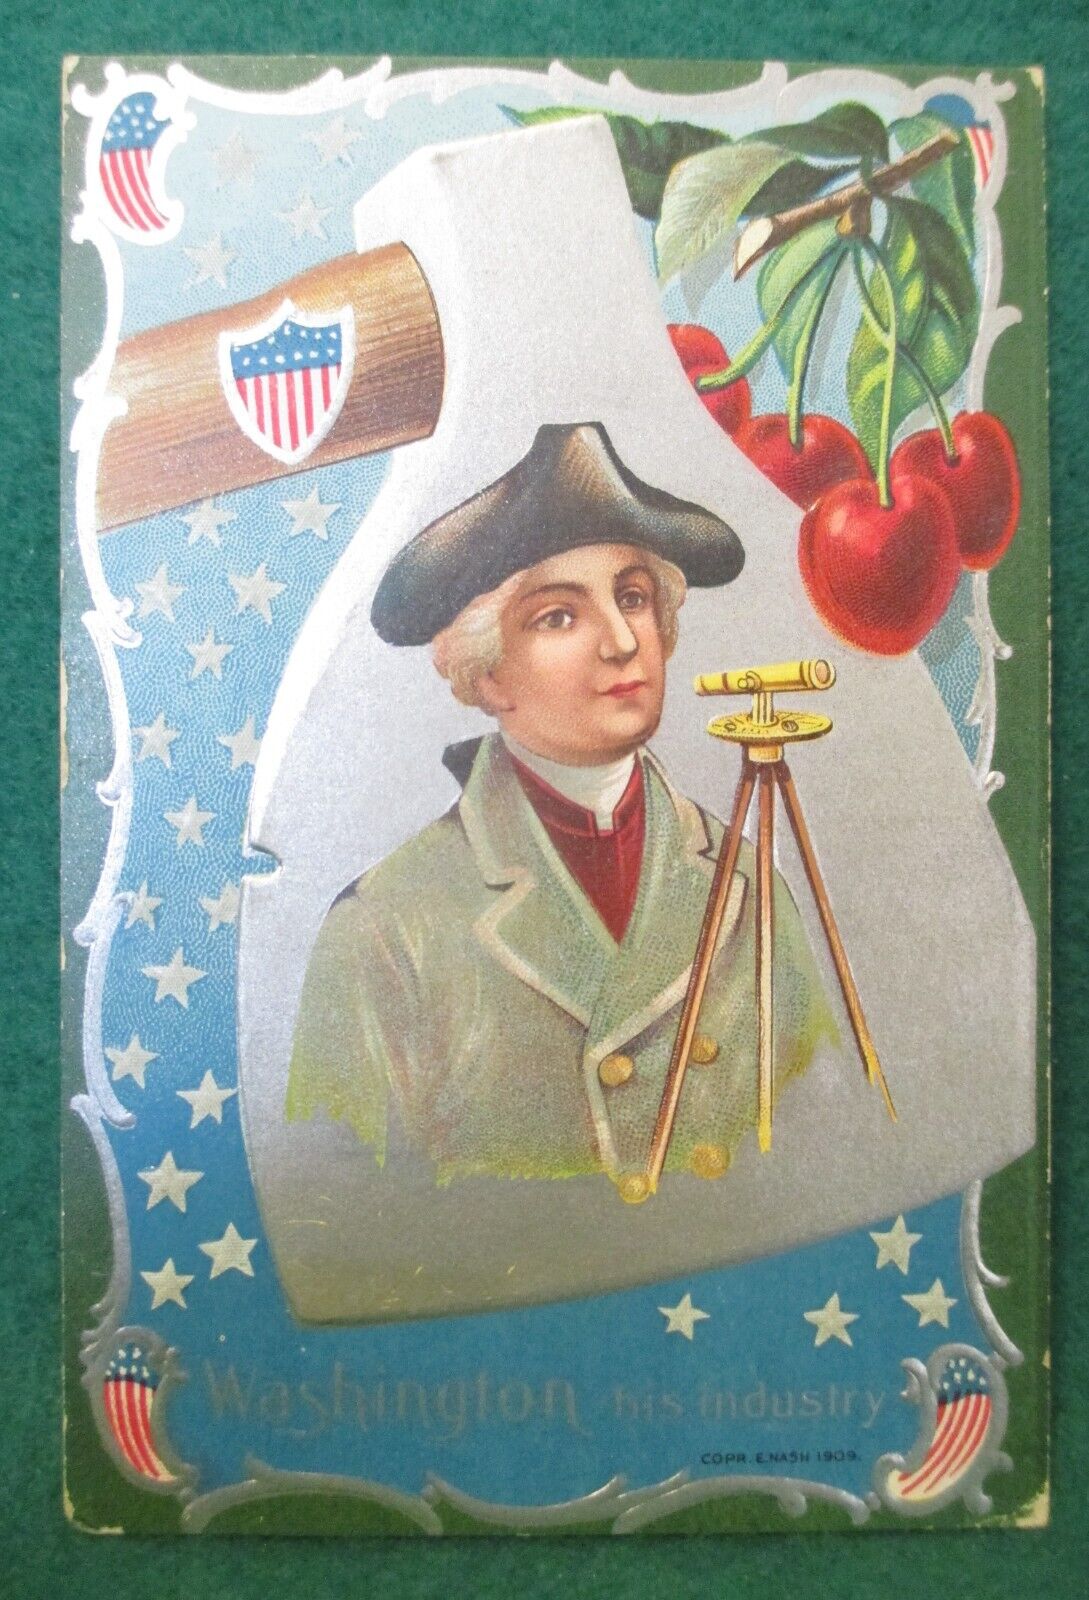 Estate Sale ~ Vintage Embossed Patriotic Postcard - Washington his Industry